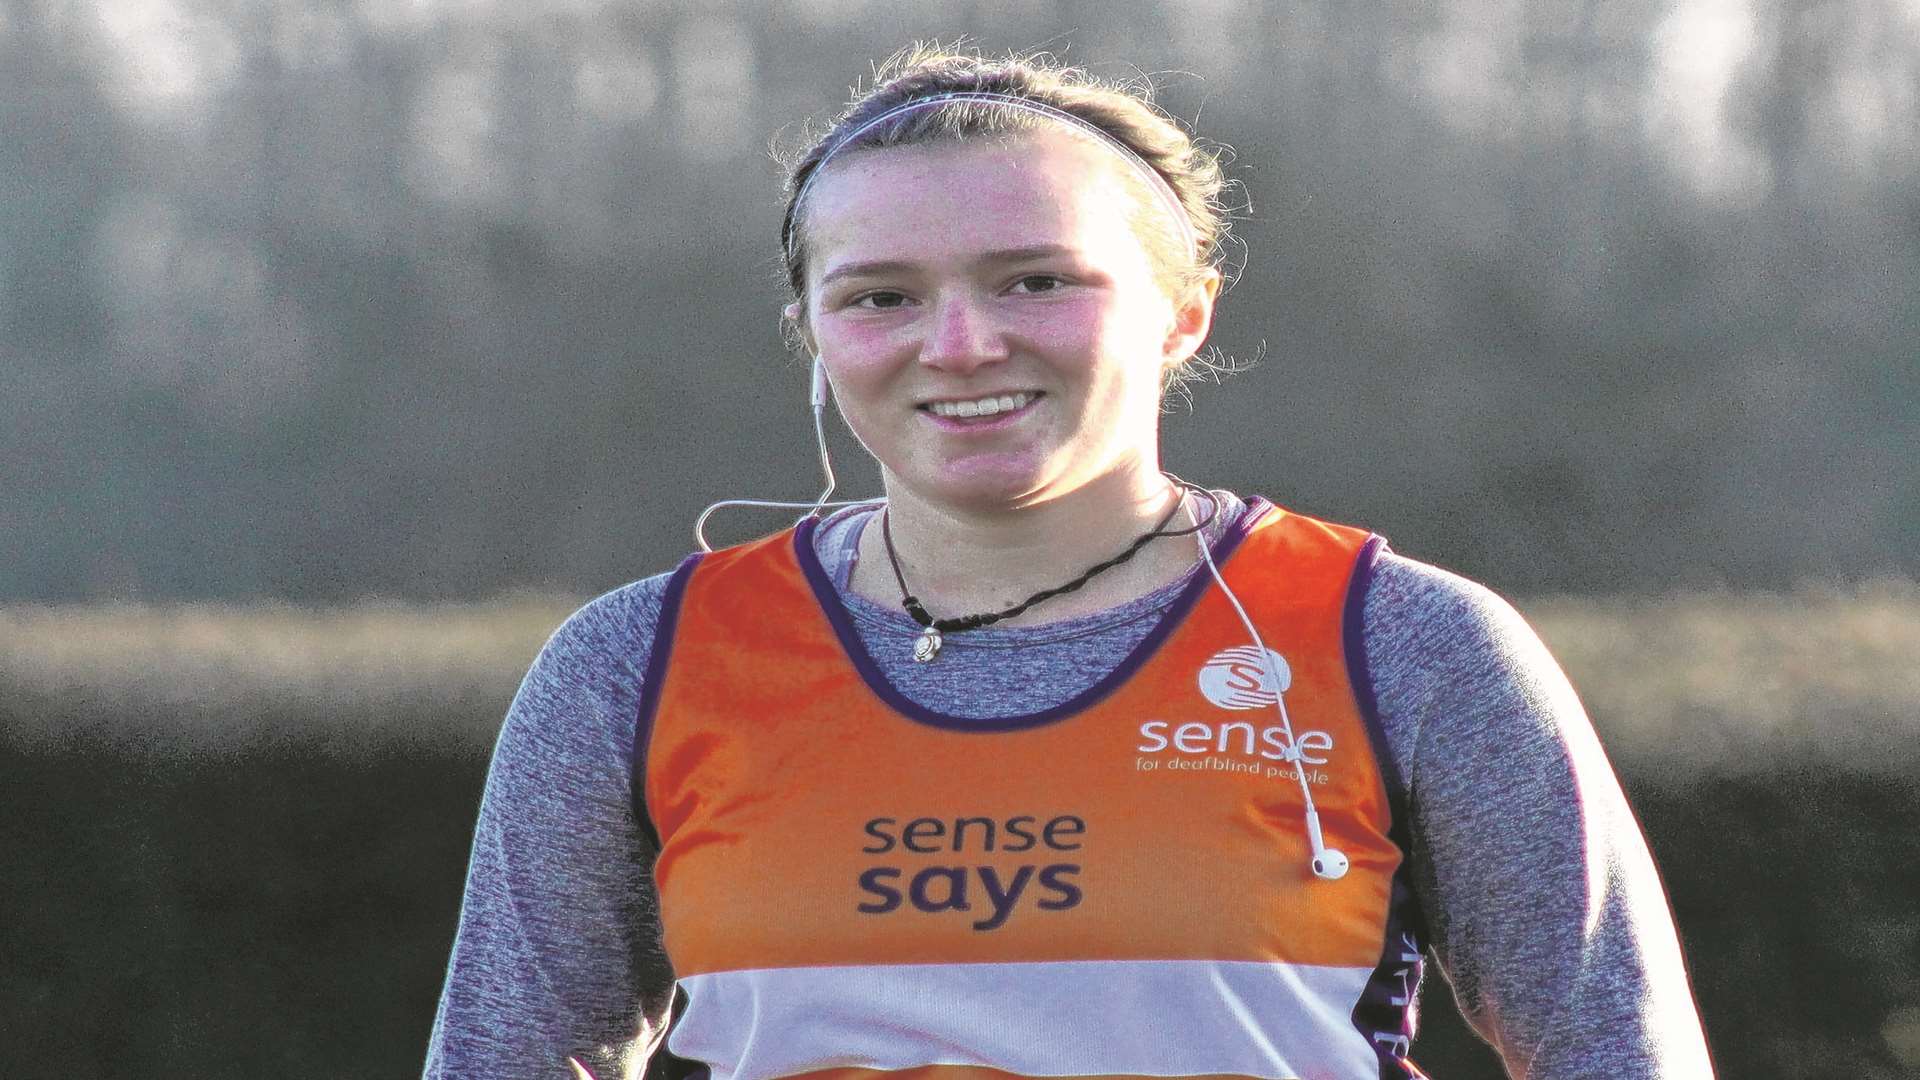 Emma Carlton will run the London Marathon this year